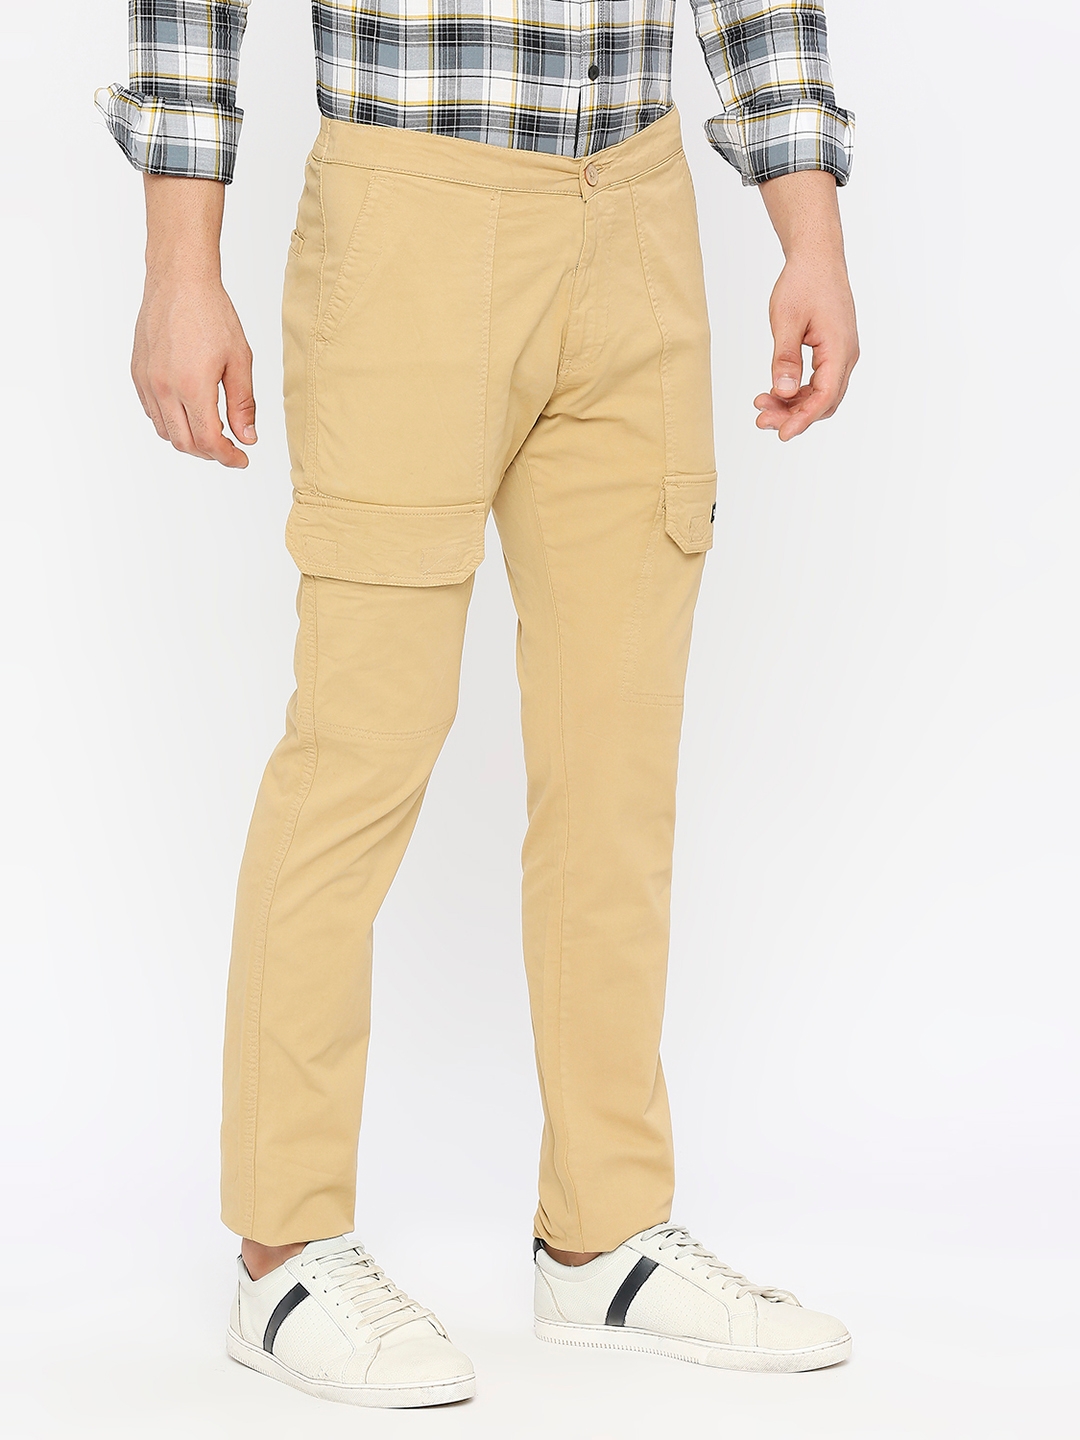 spykar | Spykar Men Light Khaki Cotton Slim Fit Ankle Length Plain Trousers 2